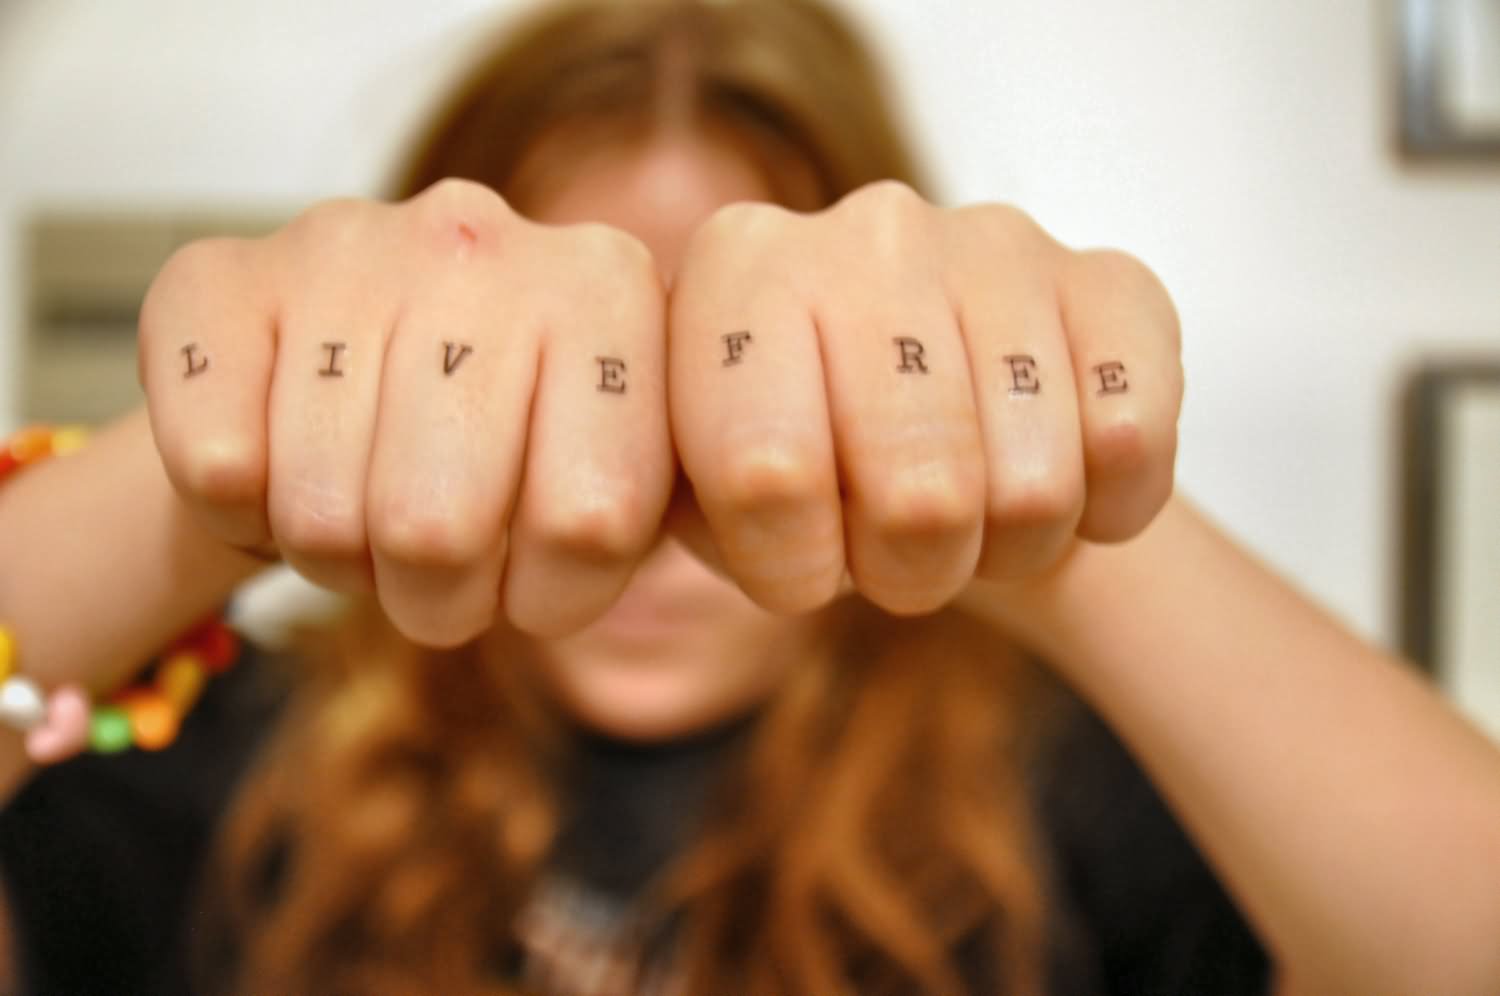 Live Free Girl Knuckle Tattoo